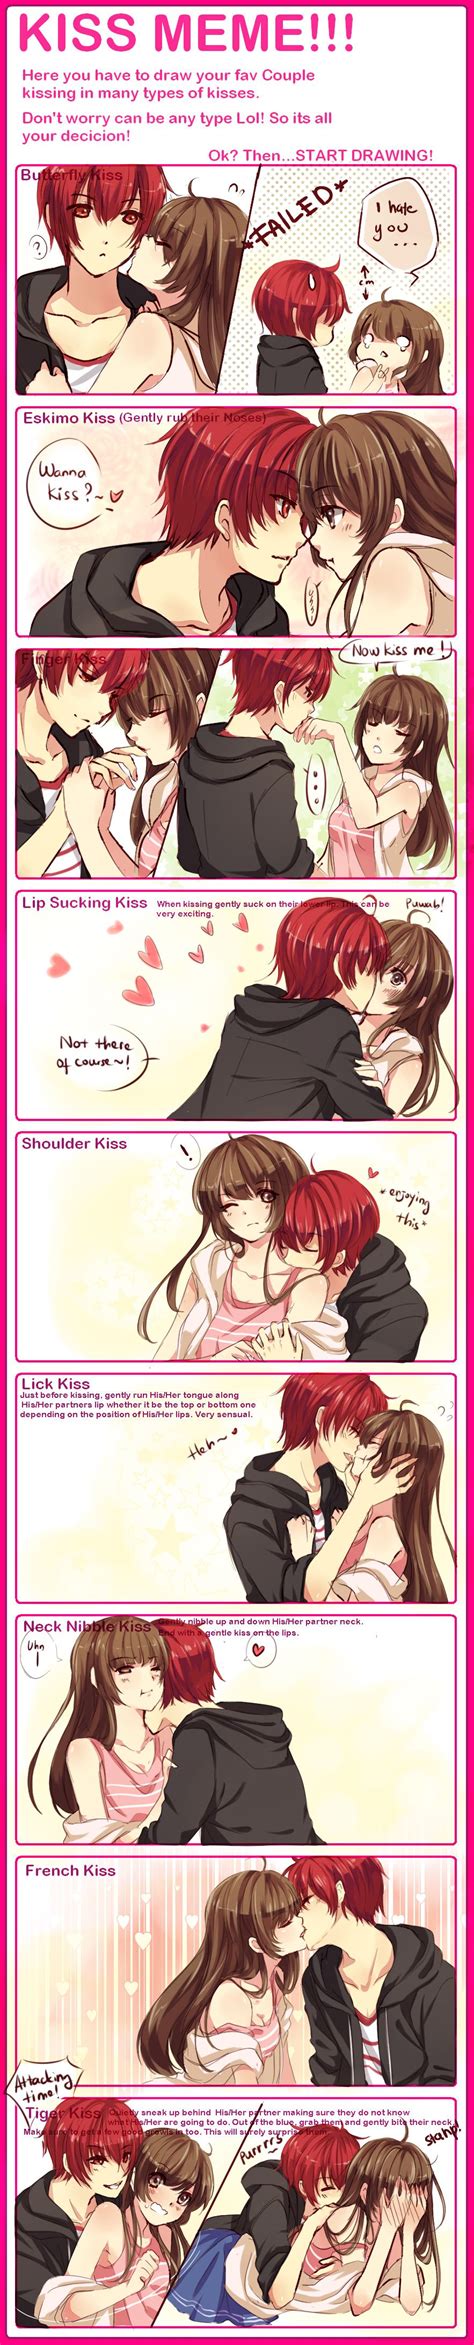 Kiss Meme With HUSBUUU By Hachiimi On DeviantArt Manga Couples Couple